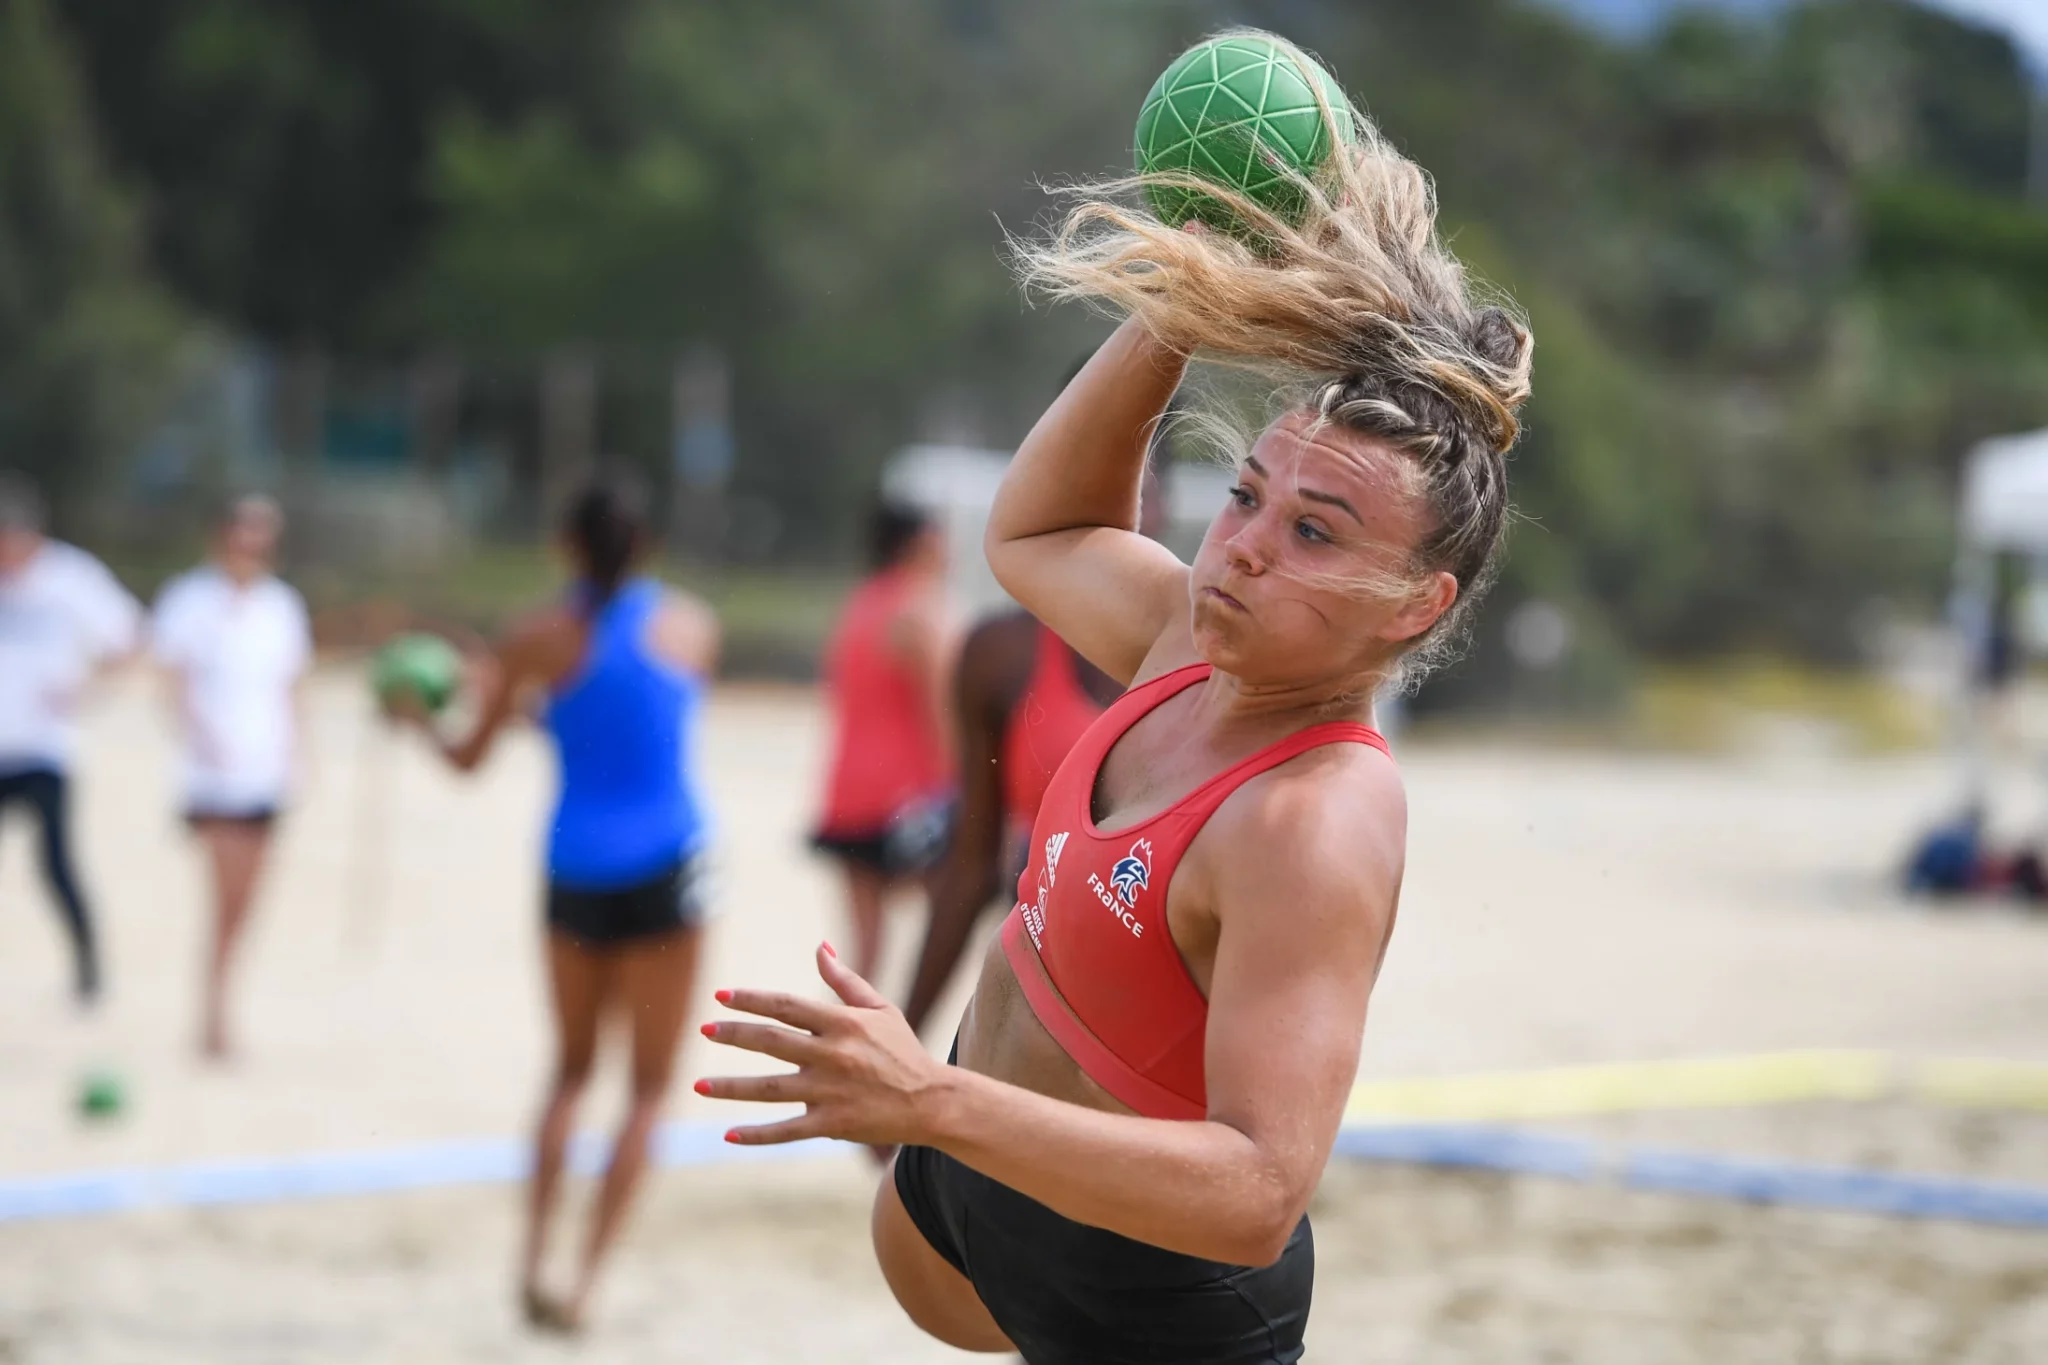 Le Beach Handball : sea, sport and sun...